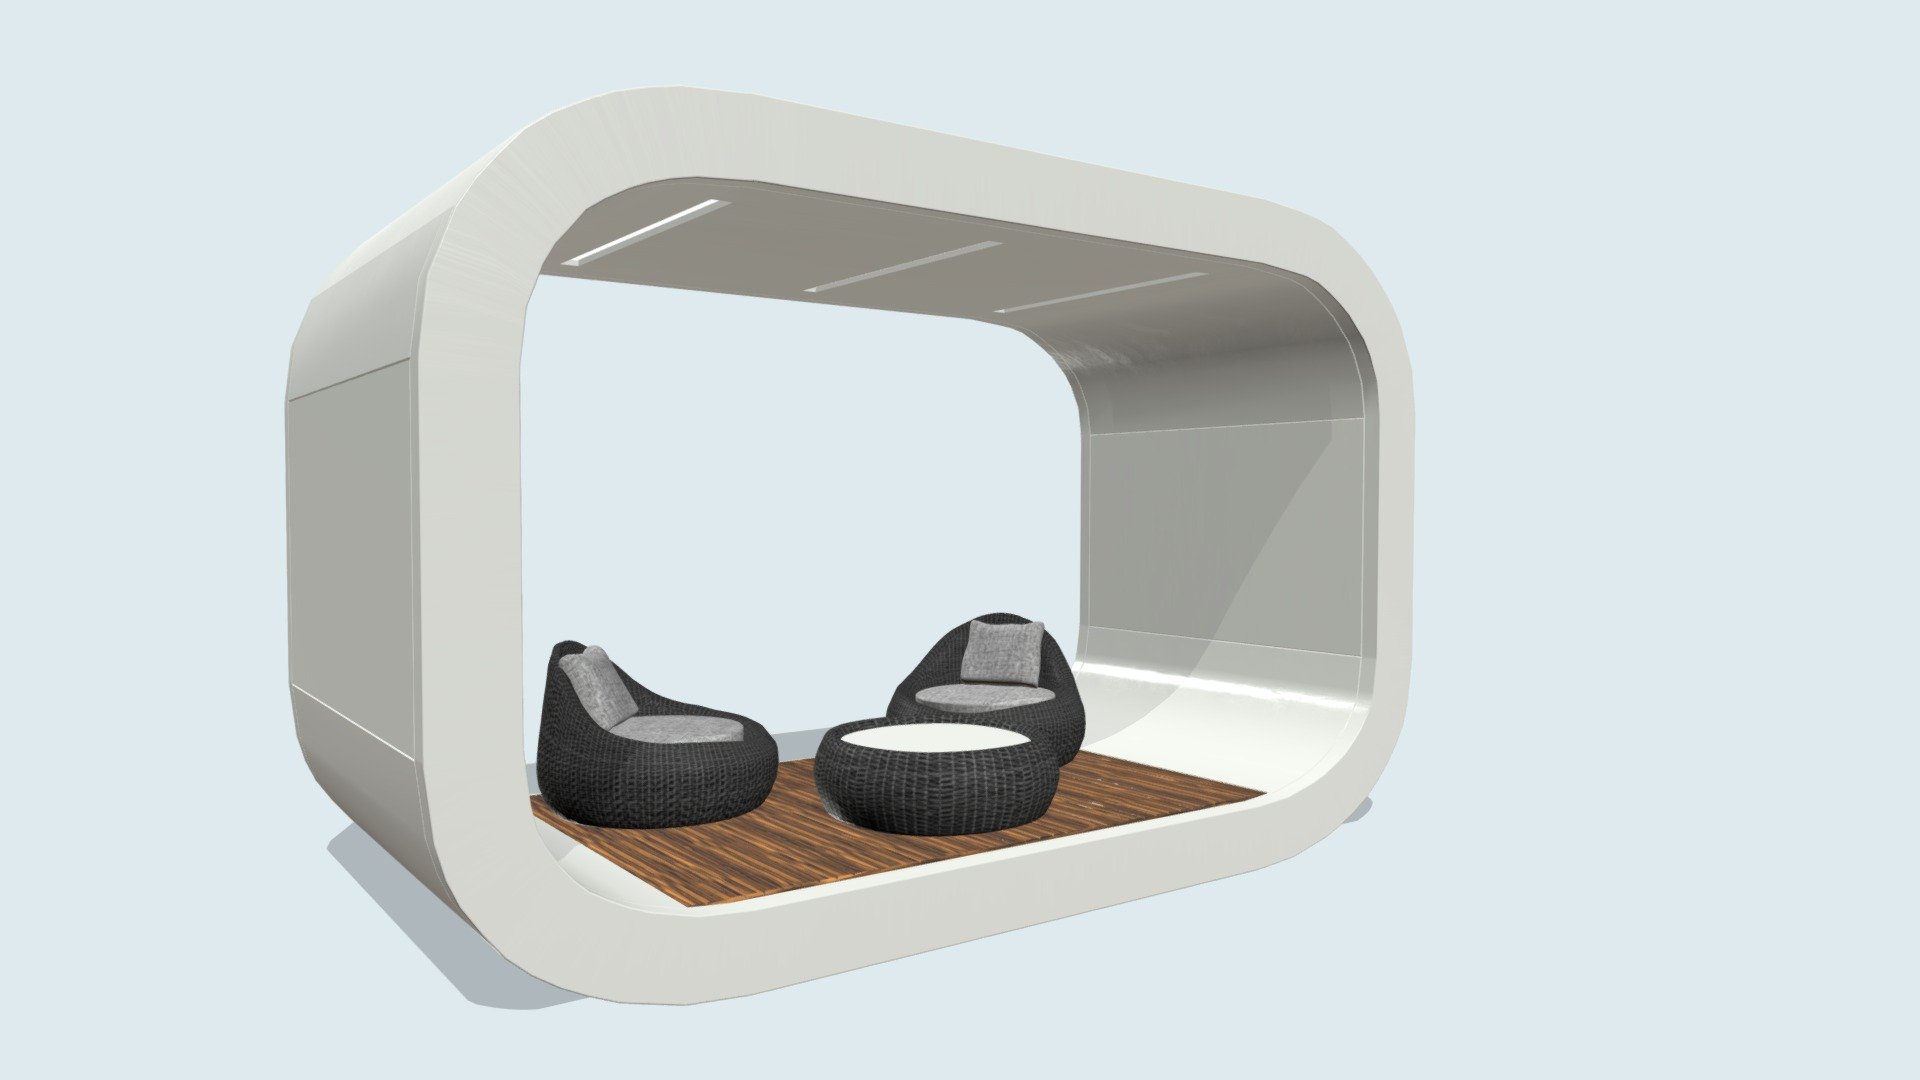 Hi tech style gazebo with furniture.


Polys: 26246

Verts: 16099

Textures: yes

Created in 3dsMax 2018
 - Беседка в стиле хай-тек с мебелью 3d model